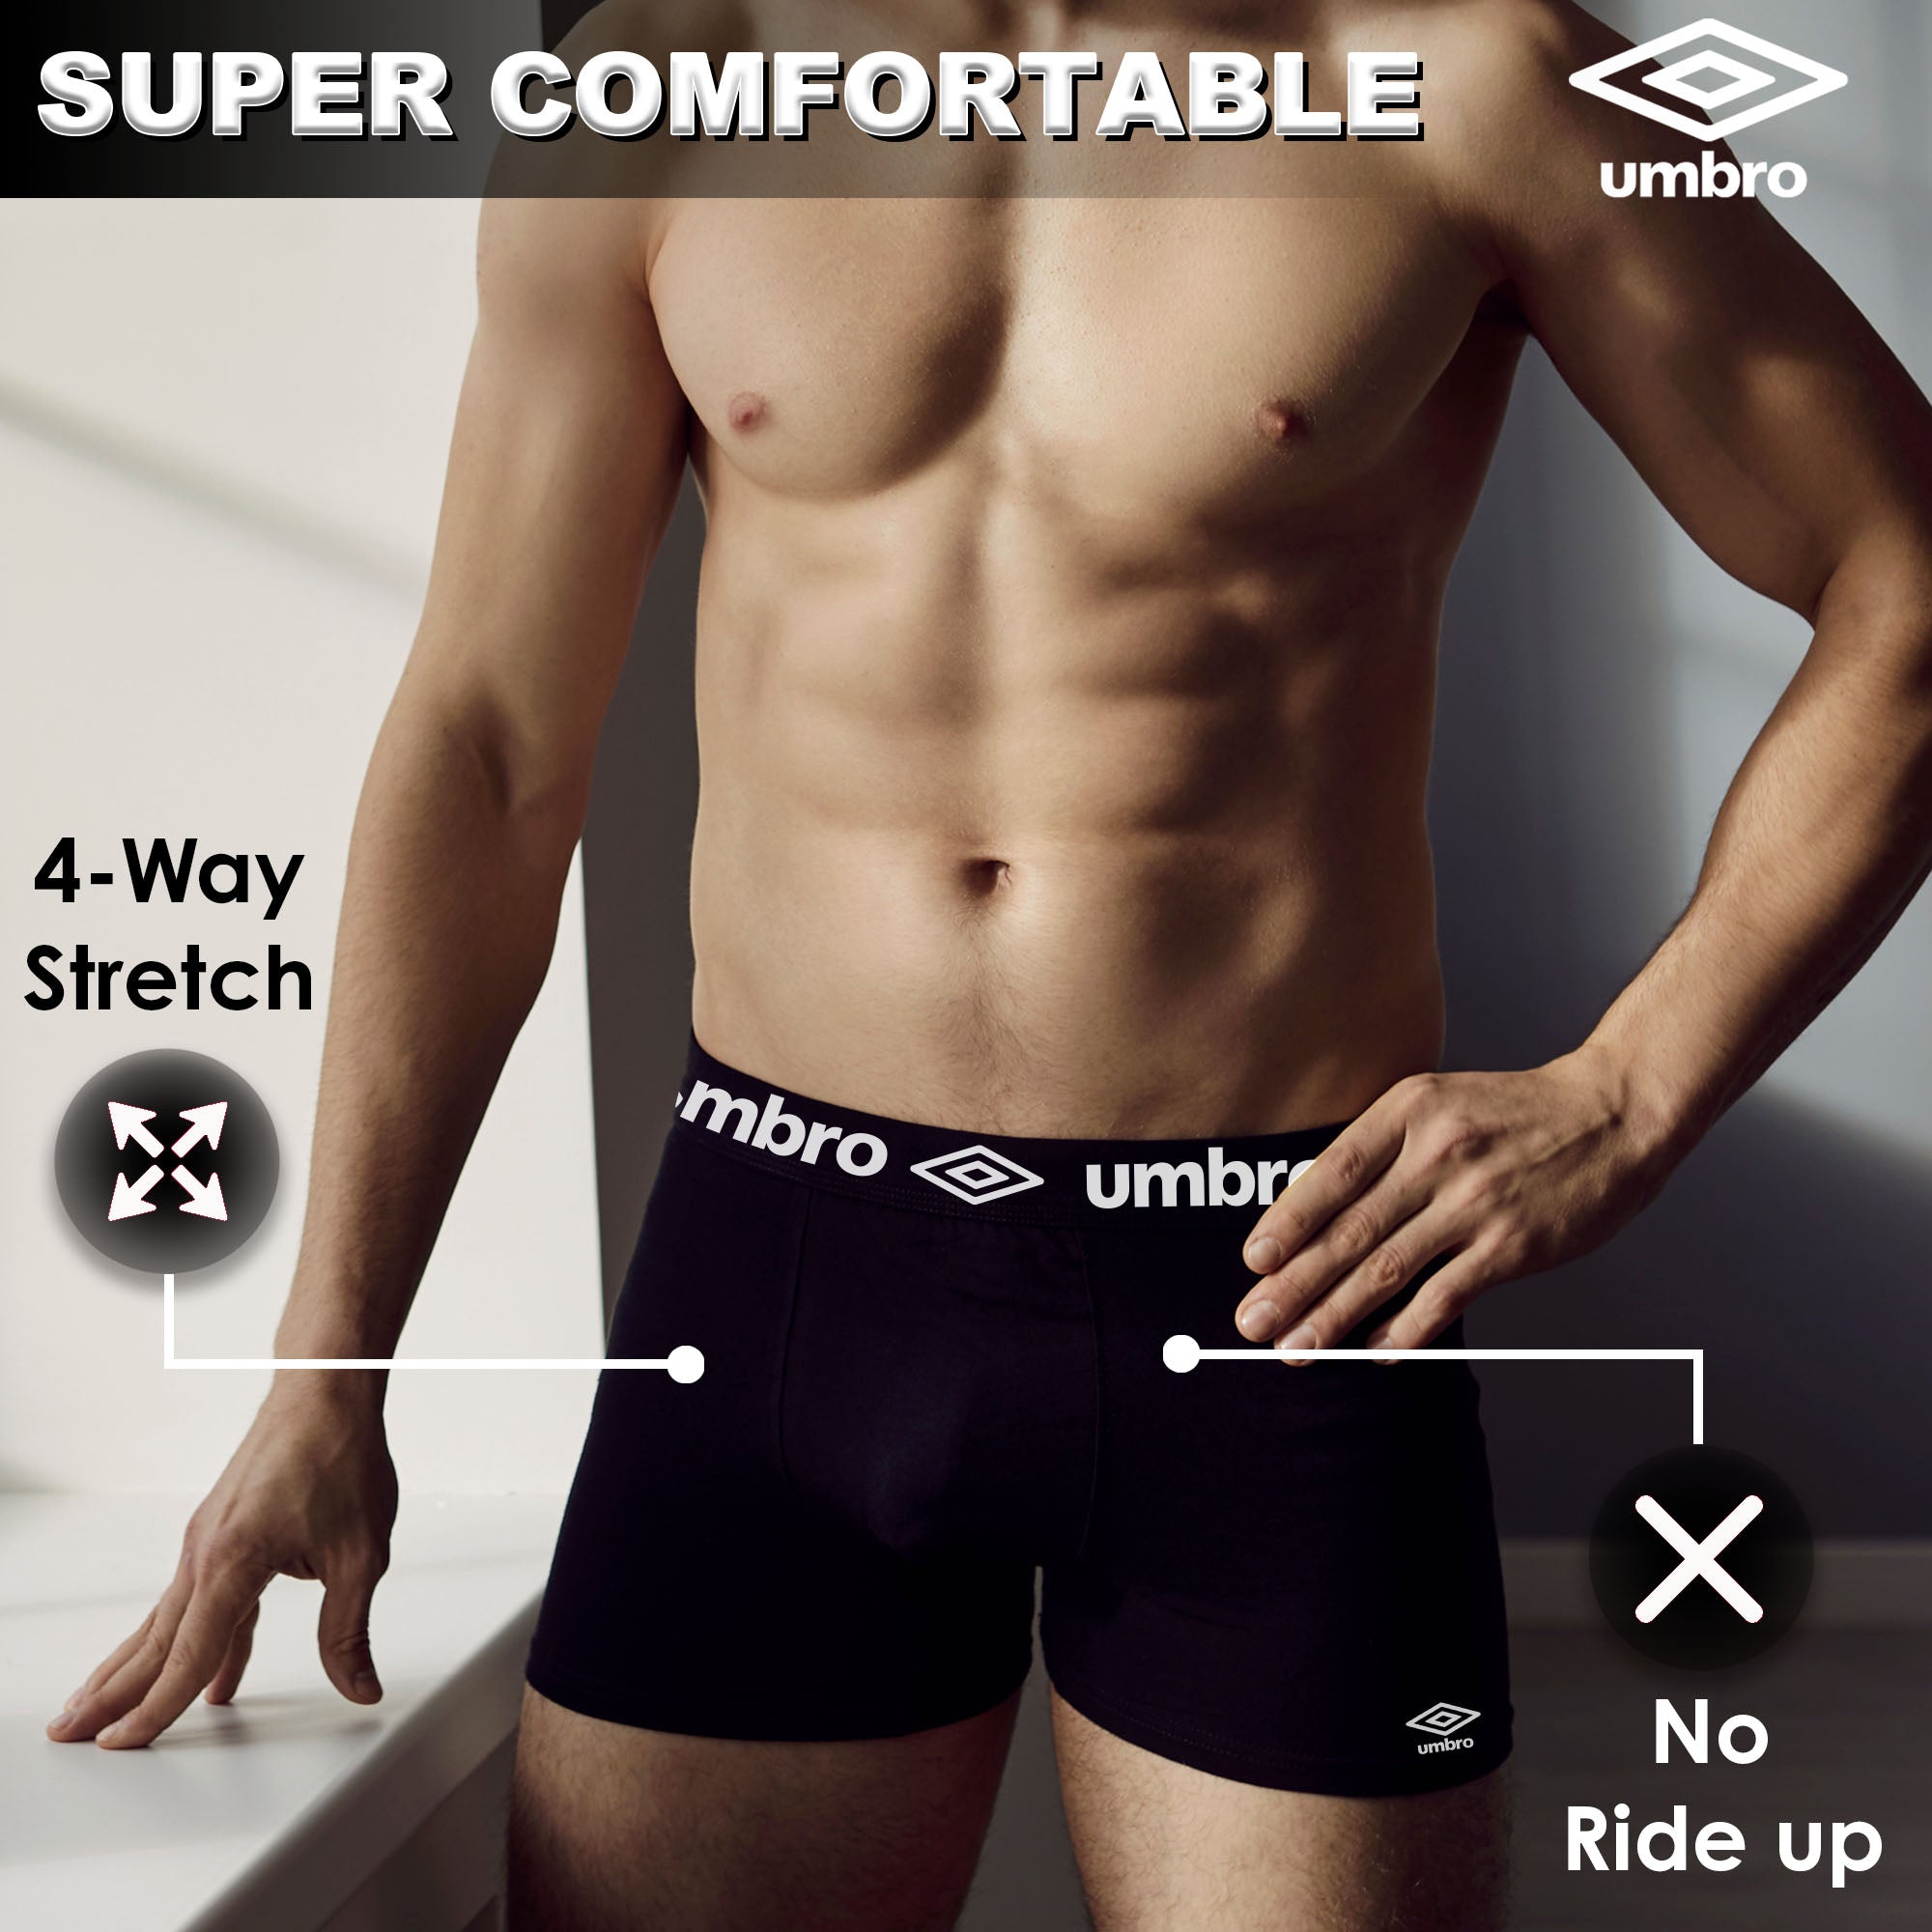 Umbro Men’s Boxer Brief – 6 Pc Pack, Cotton Underwear Boxer Briefs, Soft & Comfortable Waistband, Anti-Chafing